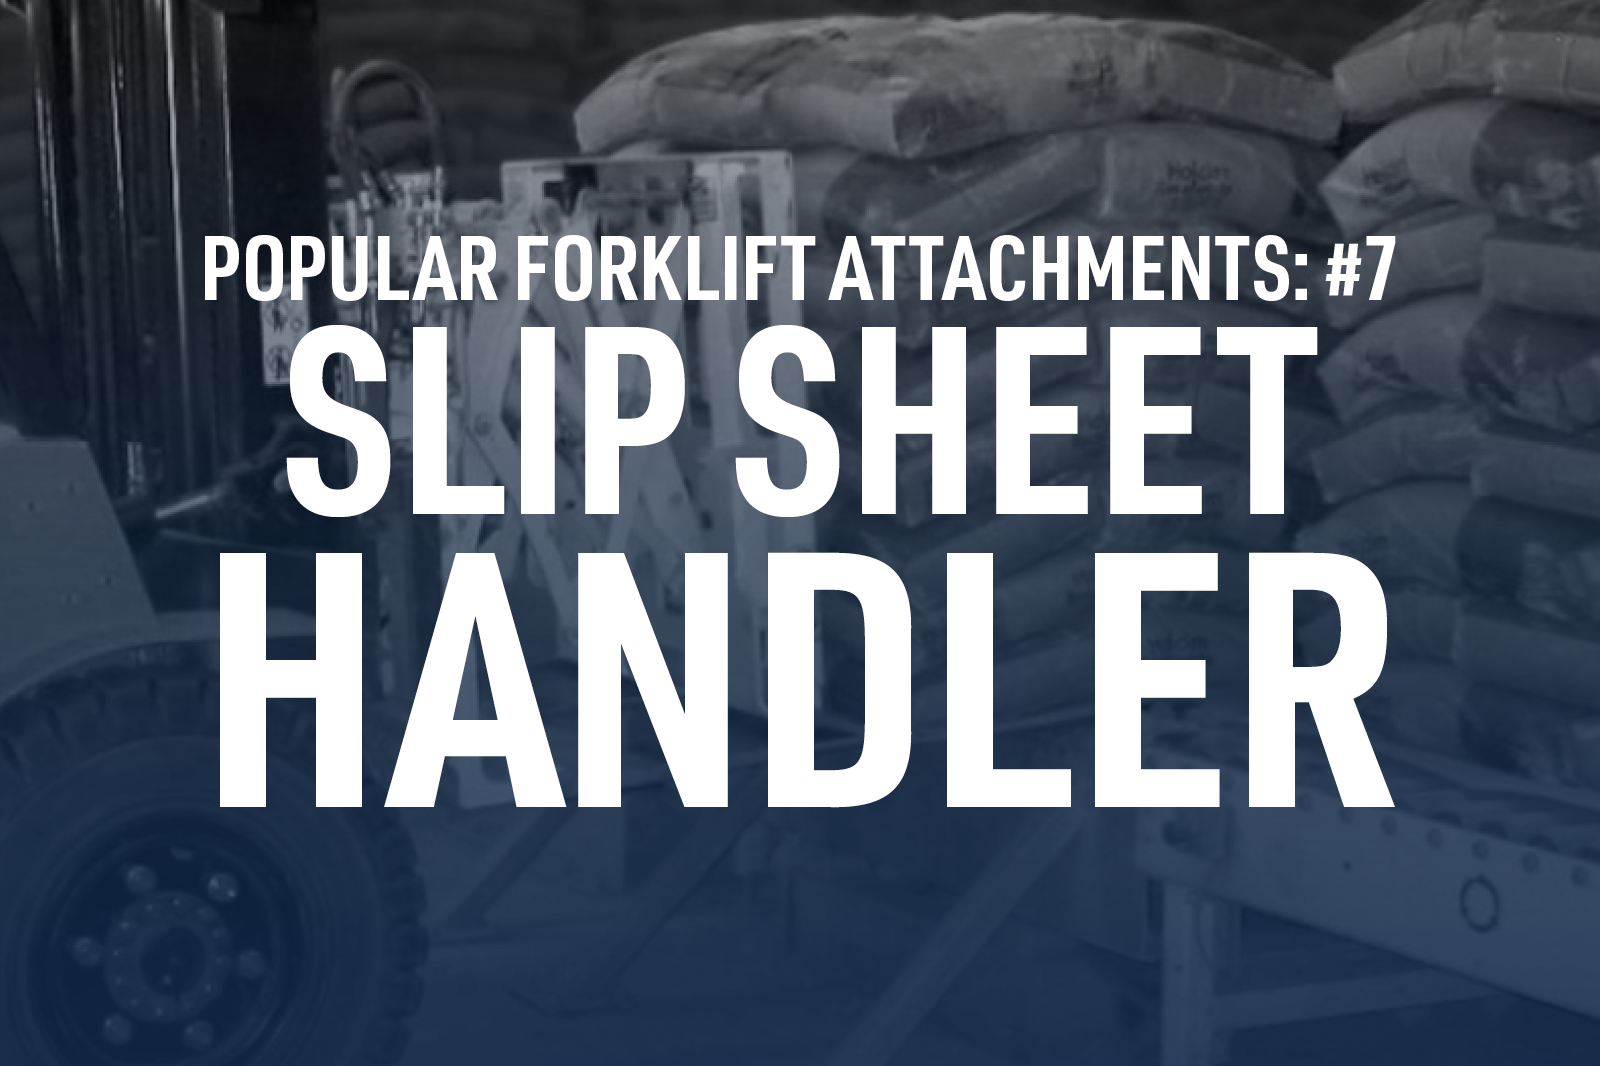 POPULAR FORKLIFT ATTACHMENTS - #7 SLIP SHEET HANDLER1